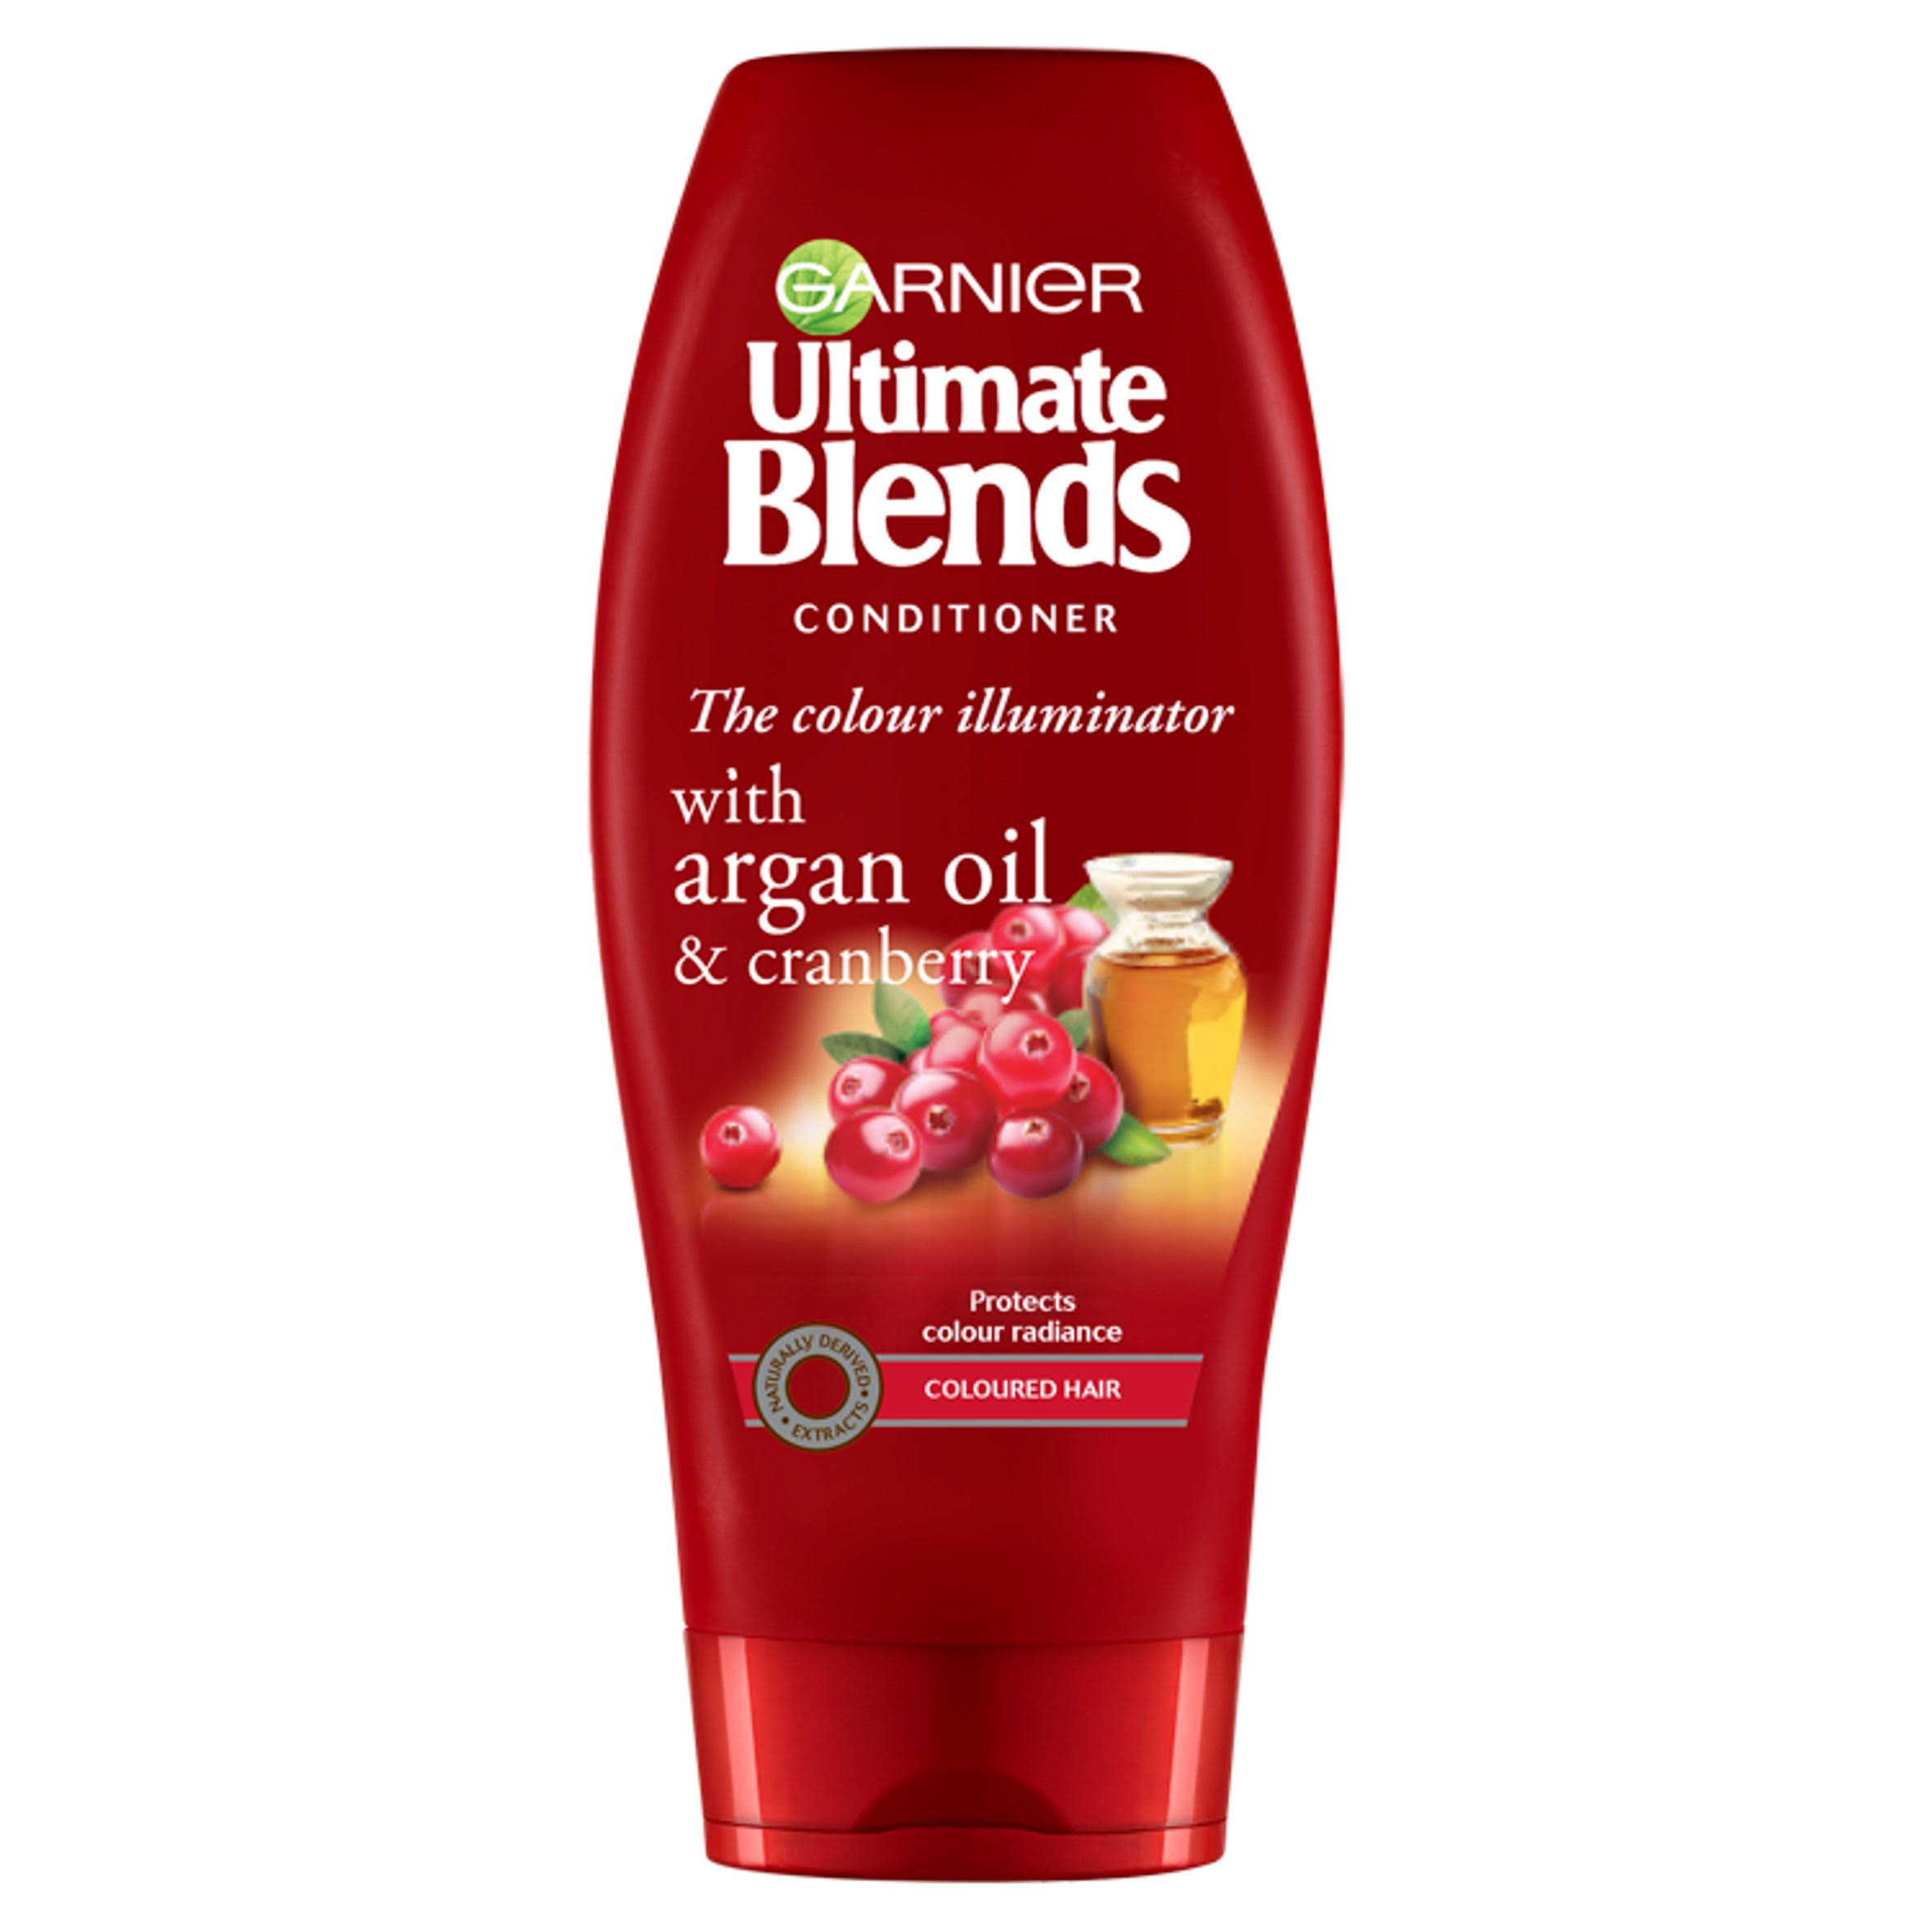 Garnier Ultimate Blends Coloured Hair Conditioner - Argan Oil & Cranberry, 360ml